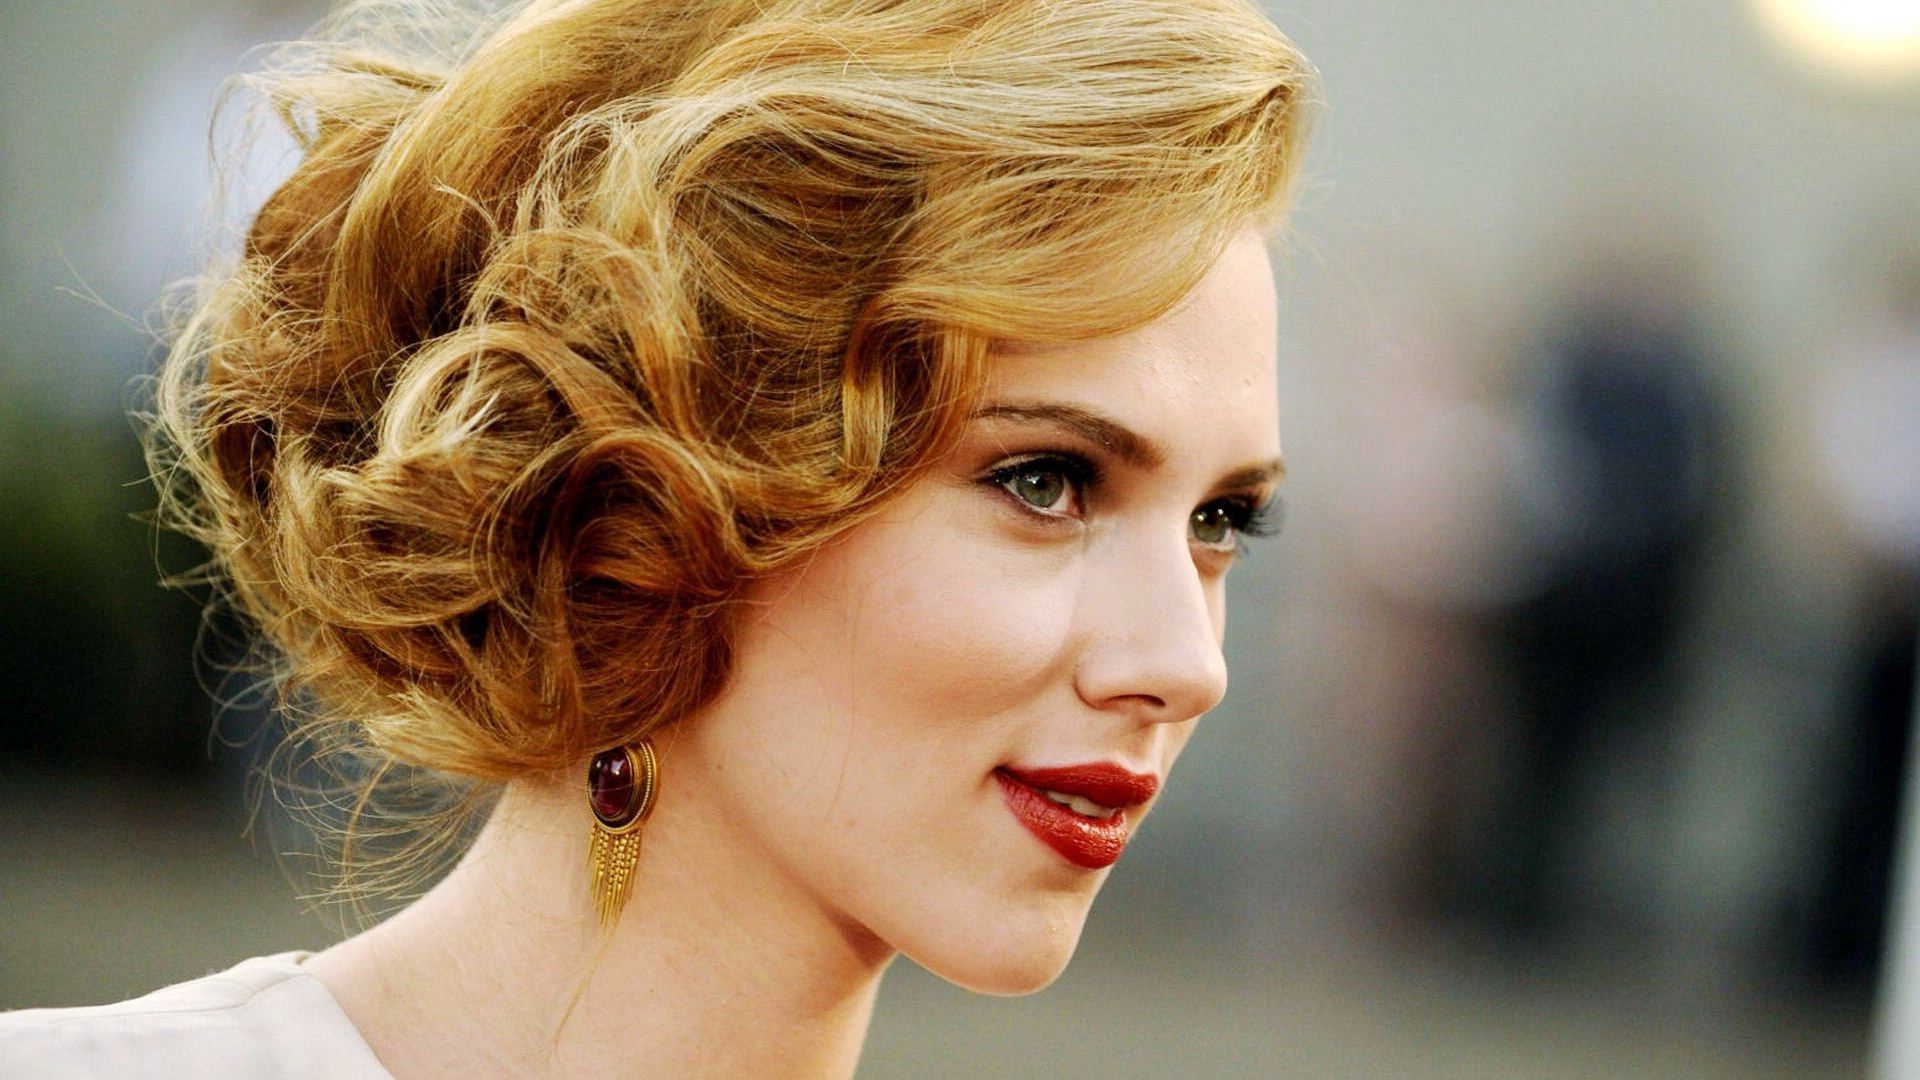 Scarlett Johansson Wallpaper HD-9